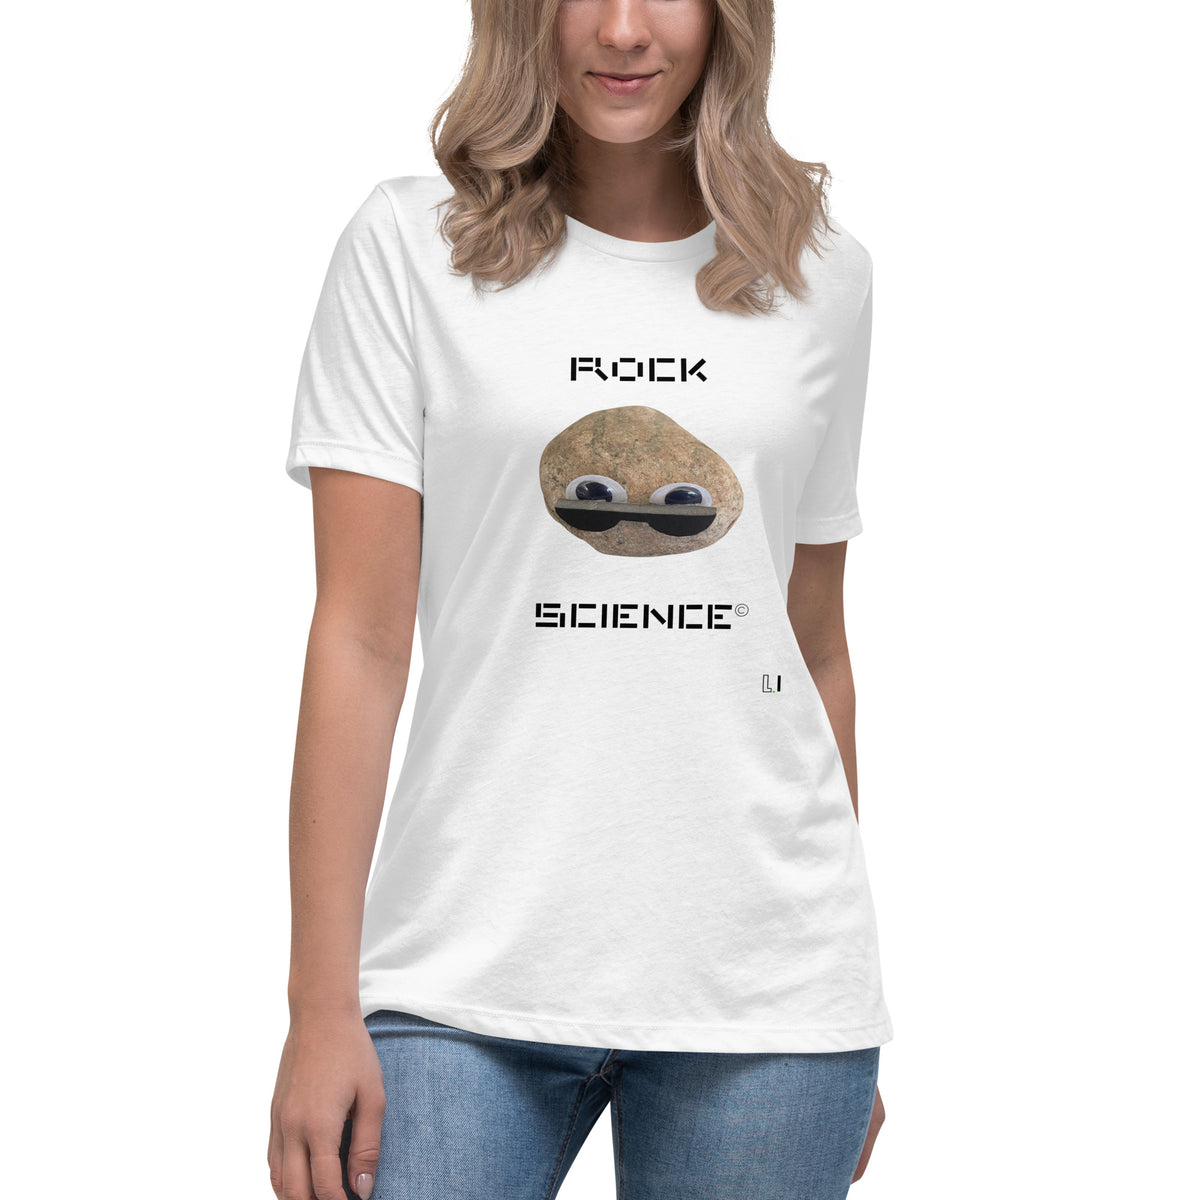 Rock Science - Women's Relaxed T-Shirt